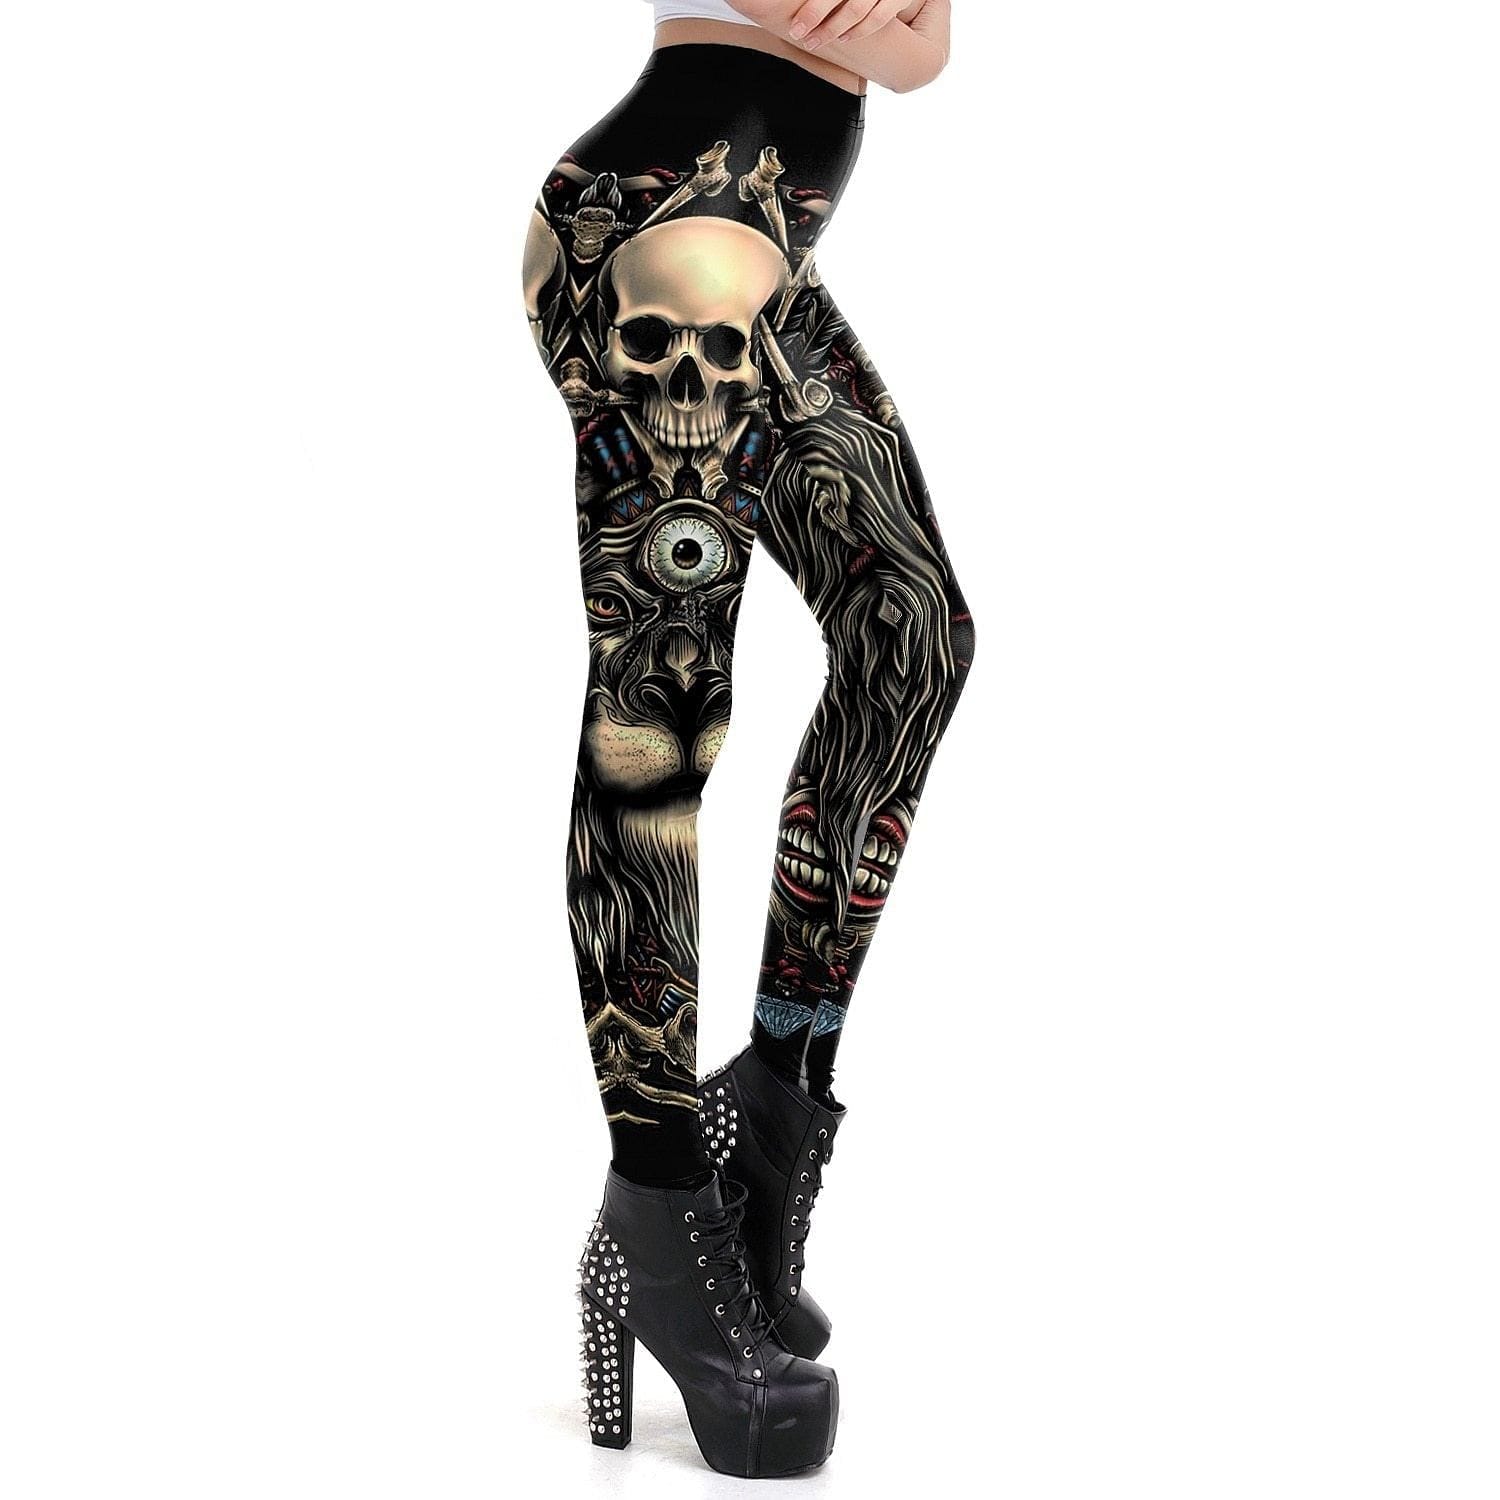 Skull Design Punk Women’s Gothic Style Steampunk Leggings